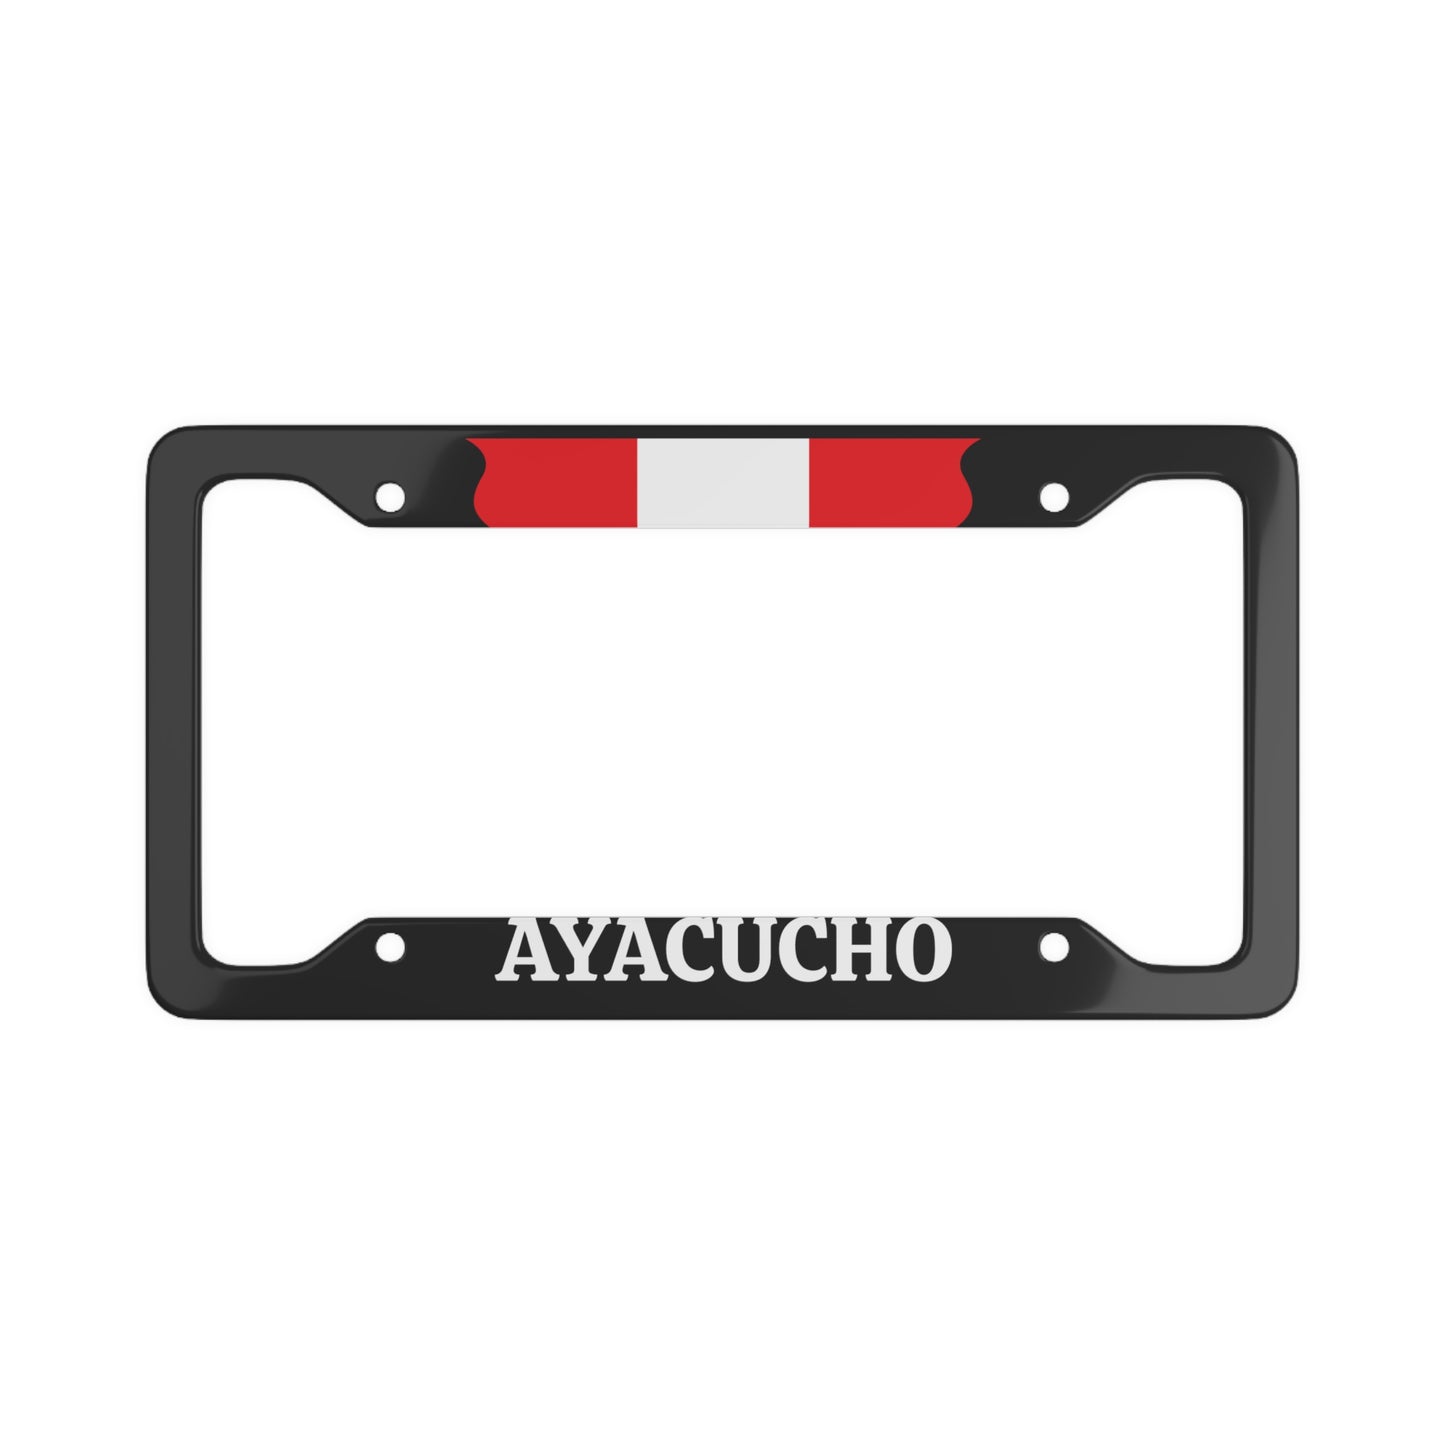 Ayacucho, Peru Car Plate Frame